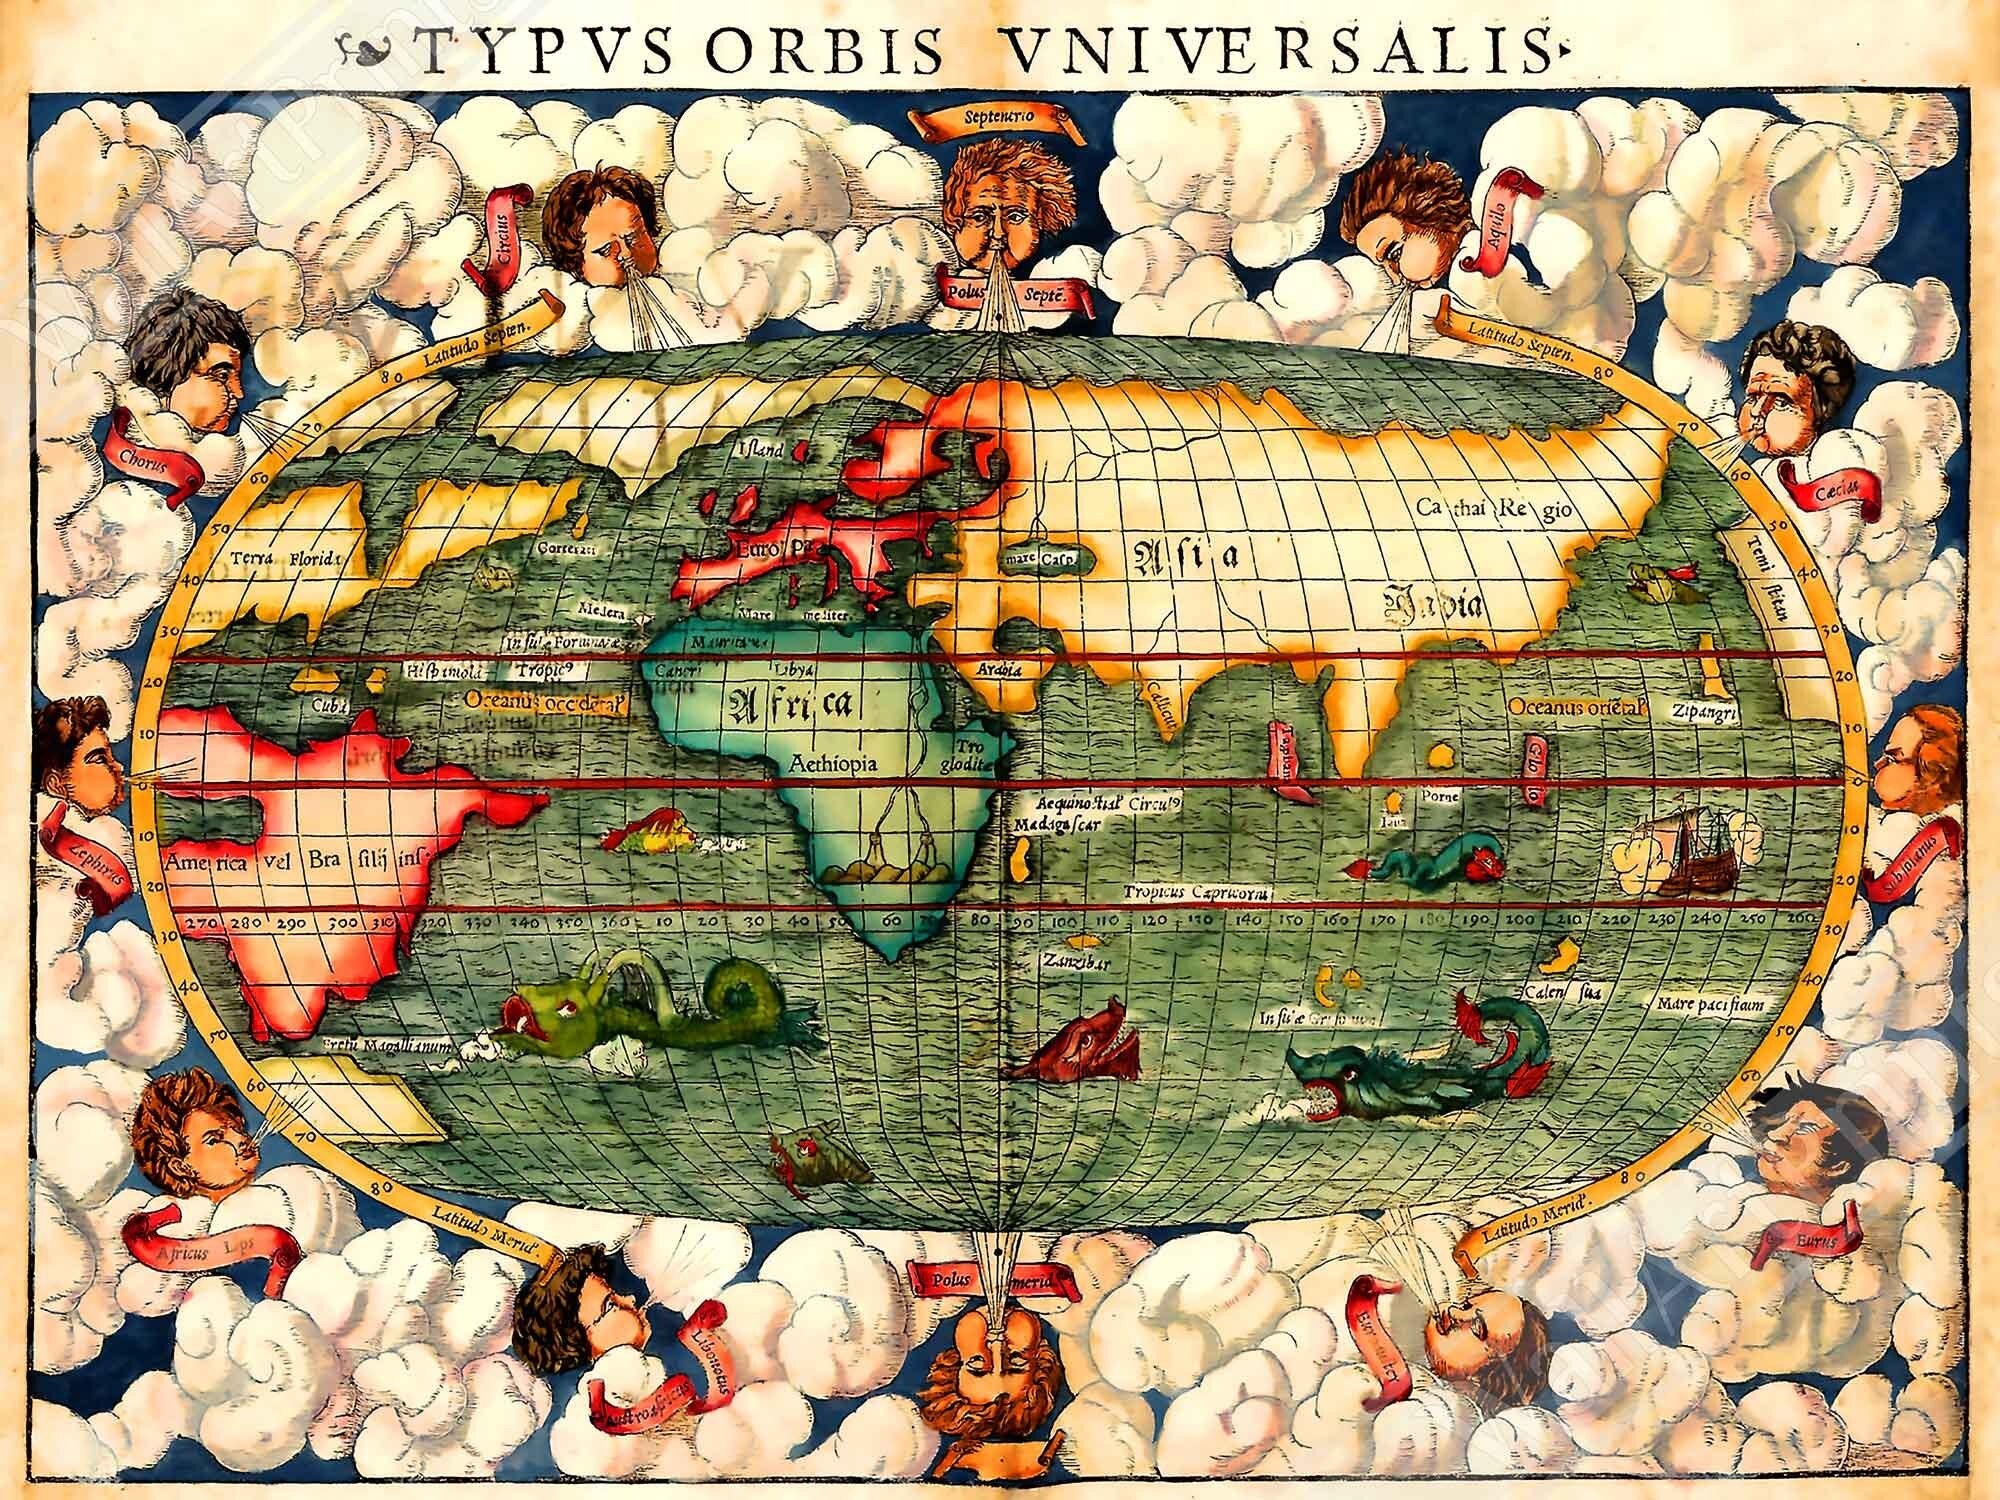 Vintage World Map Poster, Rare World Map Print From 1550, Typus Orbis Universalis Sebastian Munster - WallArtPrints4U